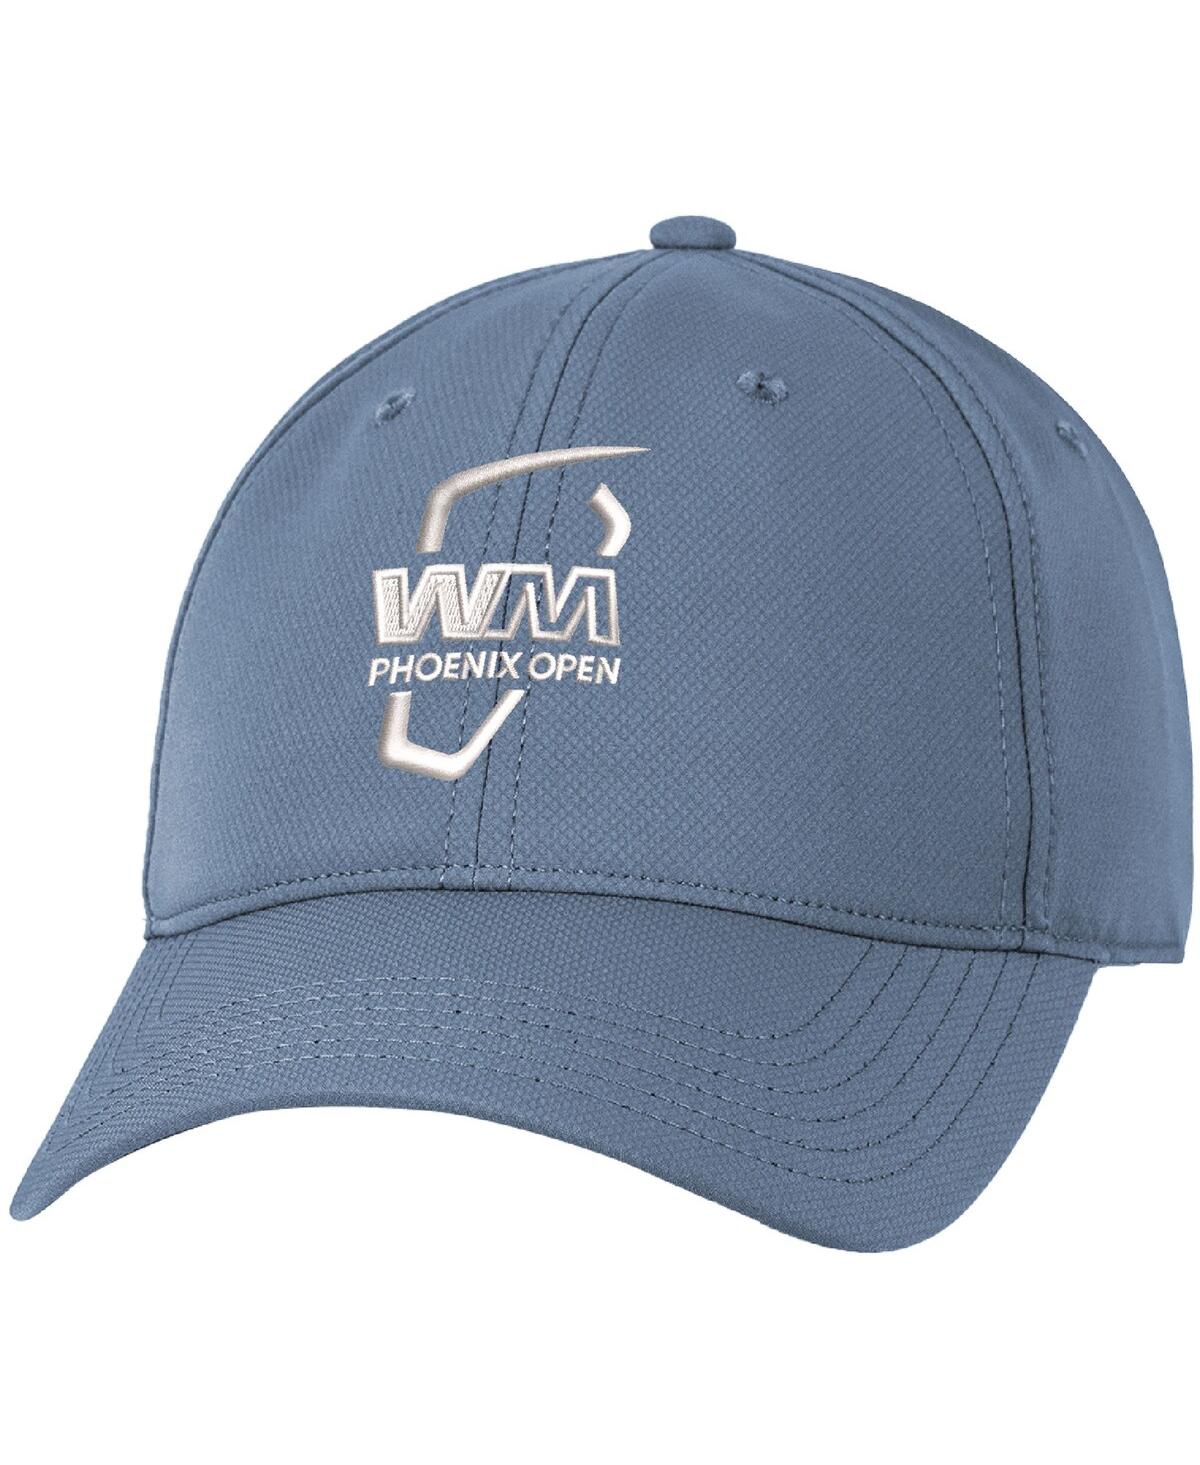 Men's and Women's Ahead Blue Wm Phoenix Open Frio Ultimate Fit AeroSphere Tech Adjustable Hat - Blue